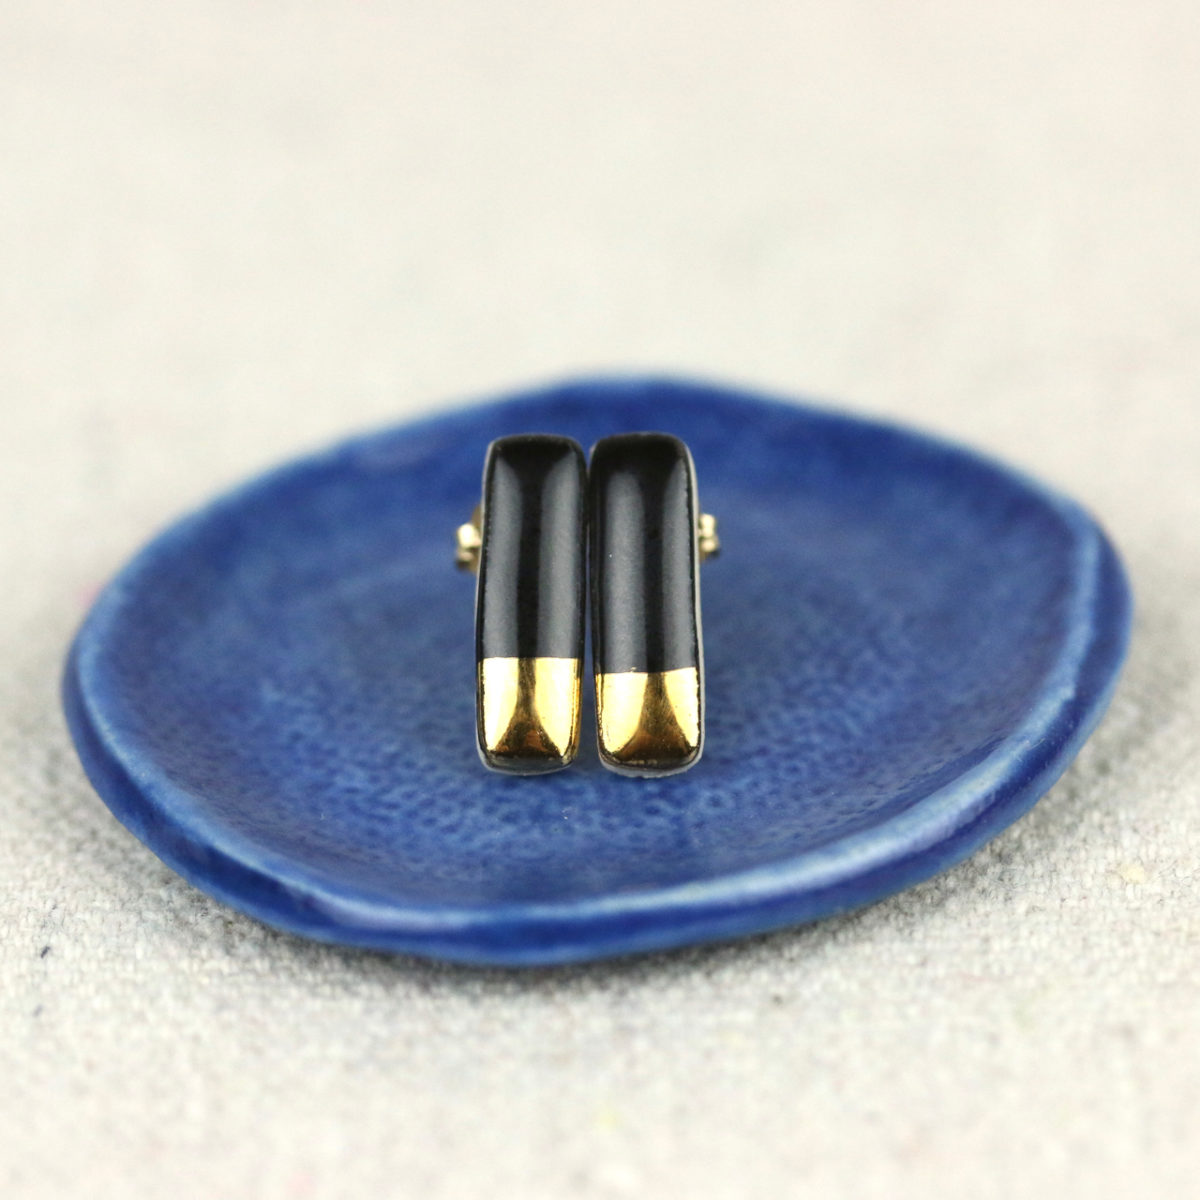 tiny reed studs on blue ceramic